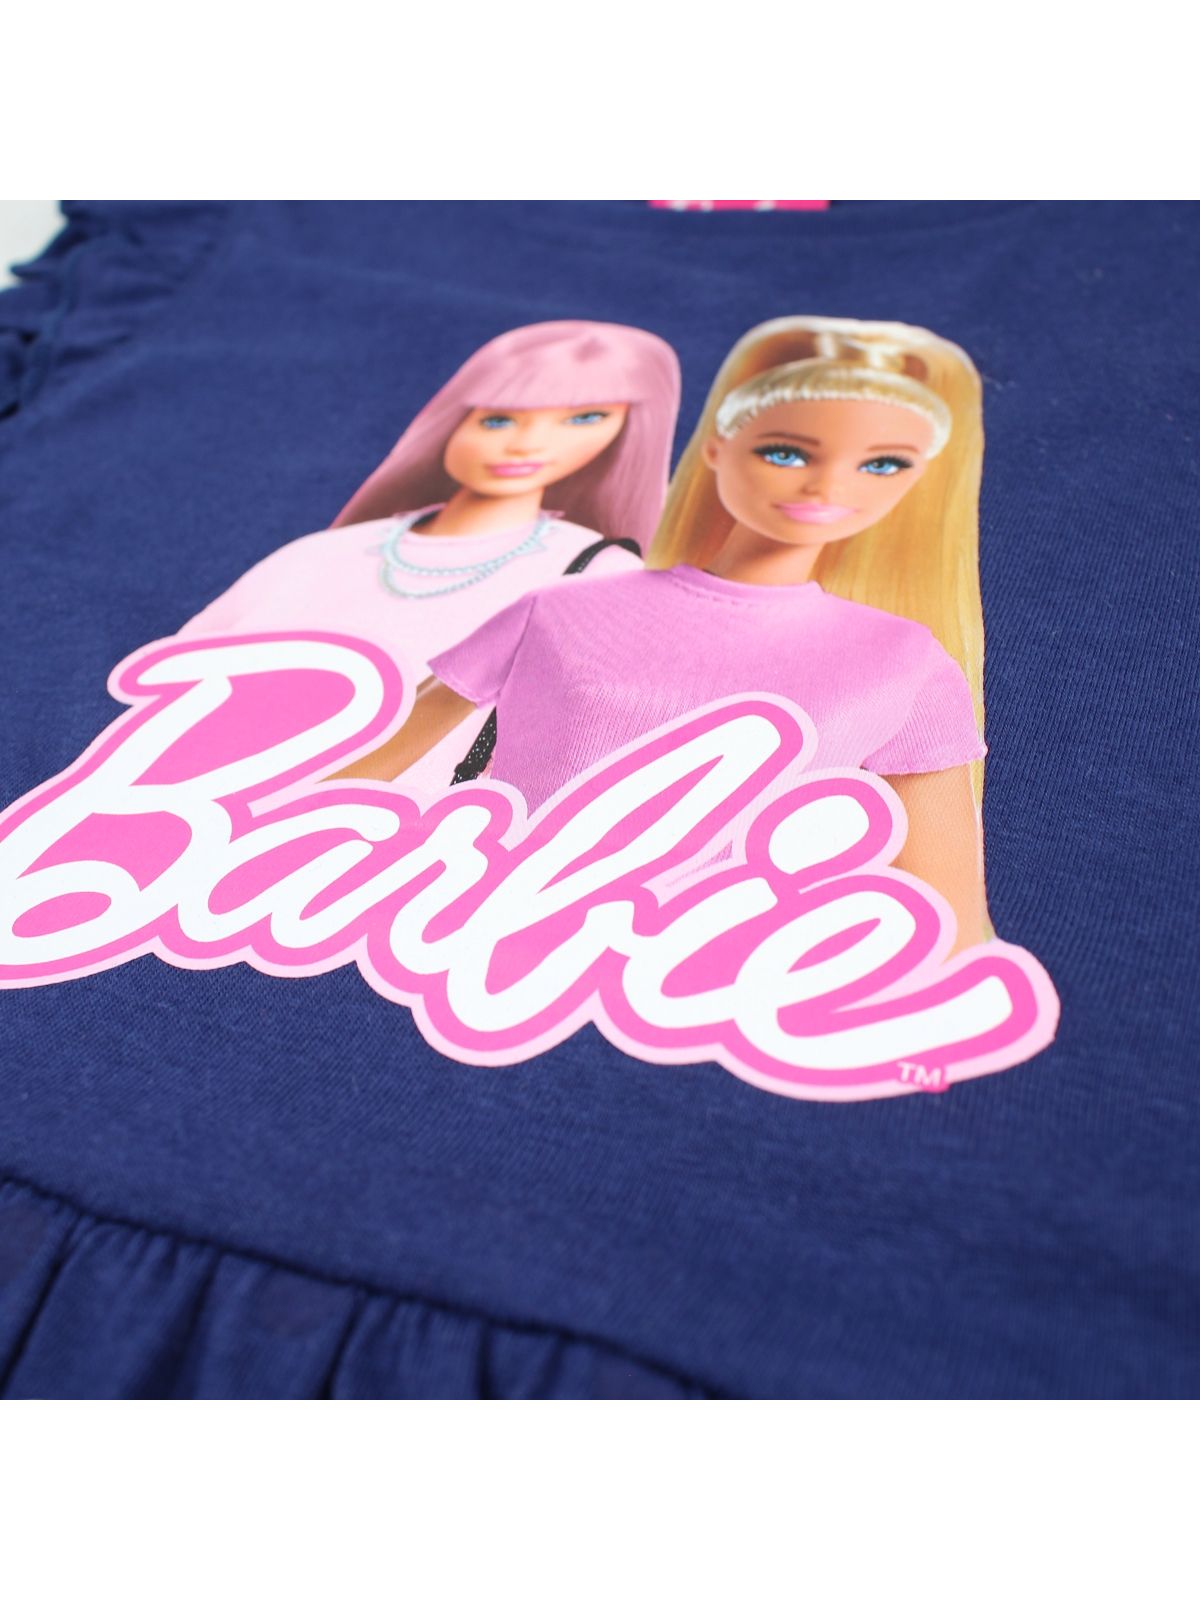 Barbie dress.